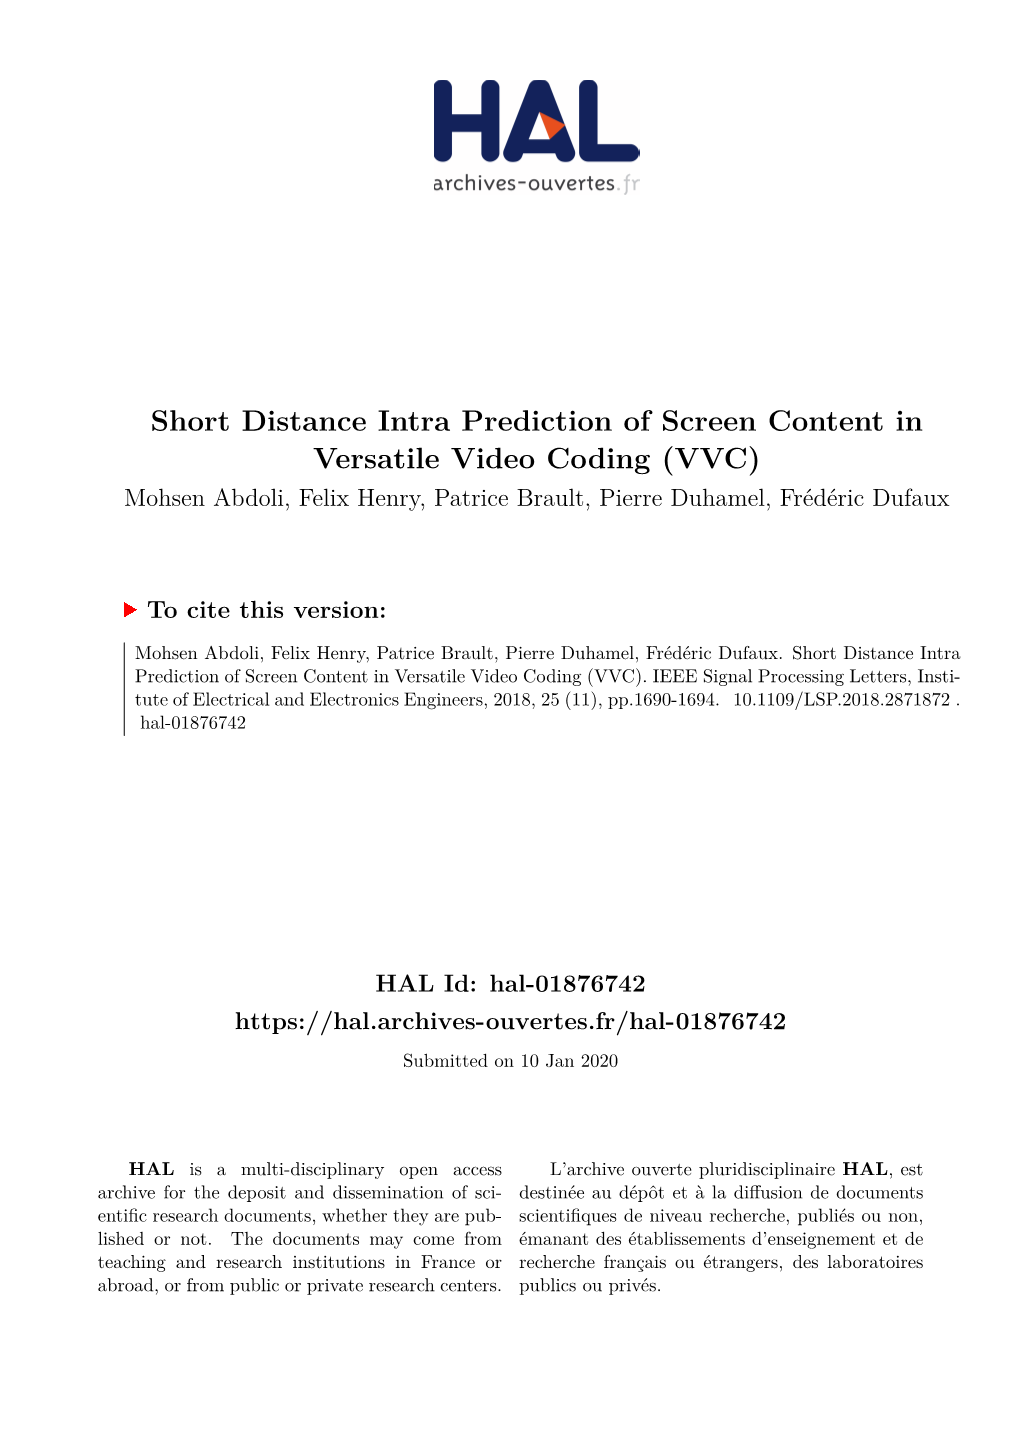 Short Distance Intra Prediction of Screen Content in Versatile Video Coding (VVC) Mohsen Abdoli, Felix Henry, Patrice Brault, Pierre Duhamel, Frédéric Dufaux